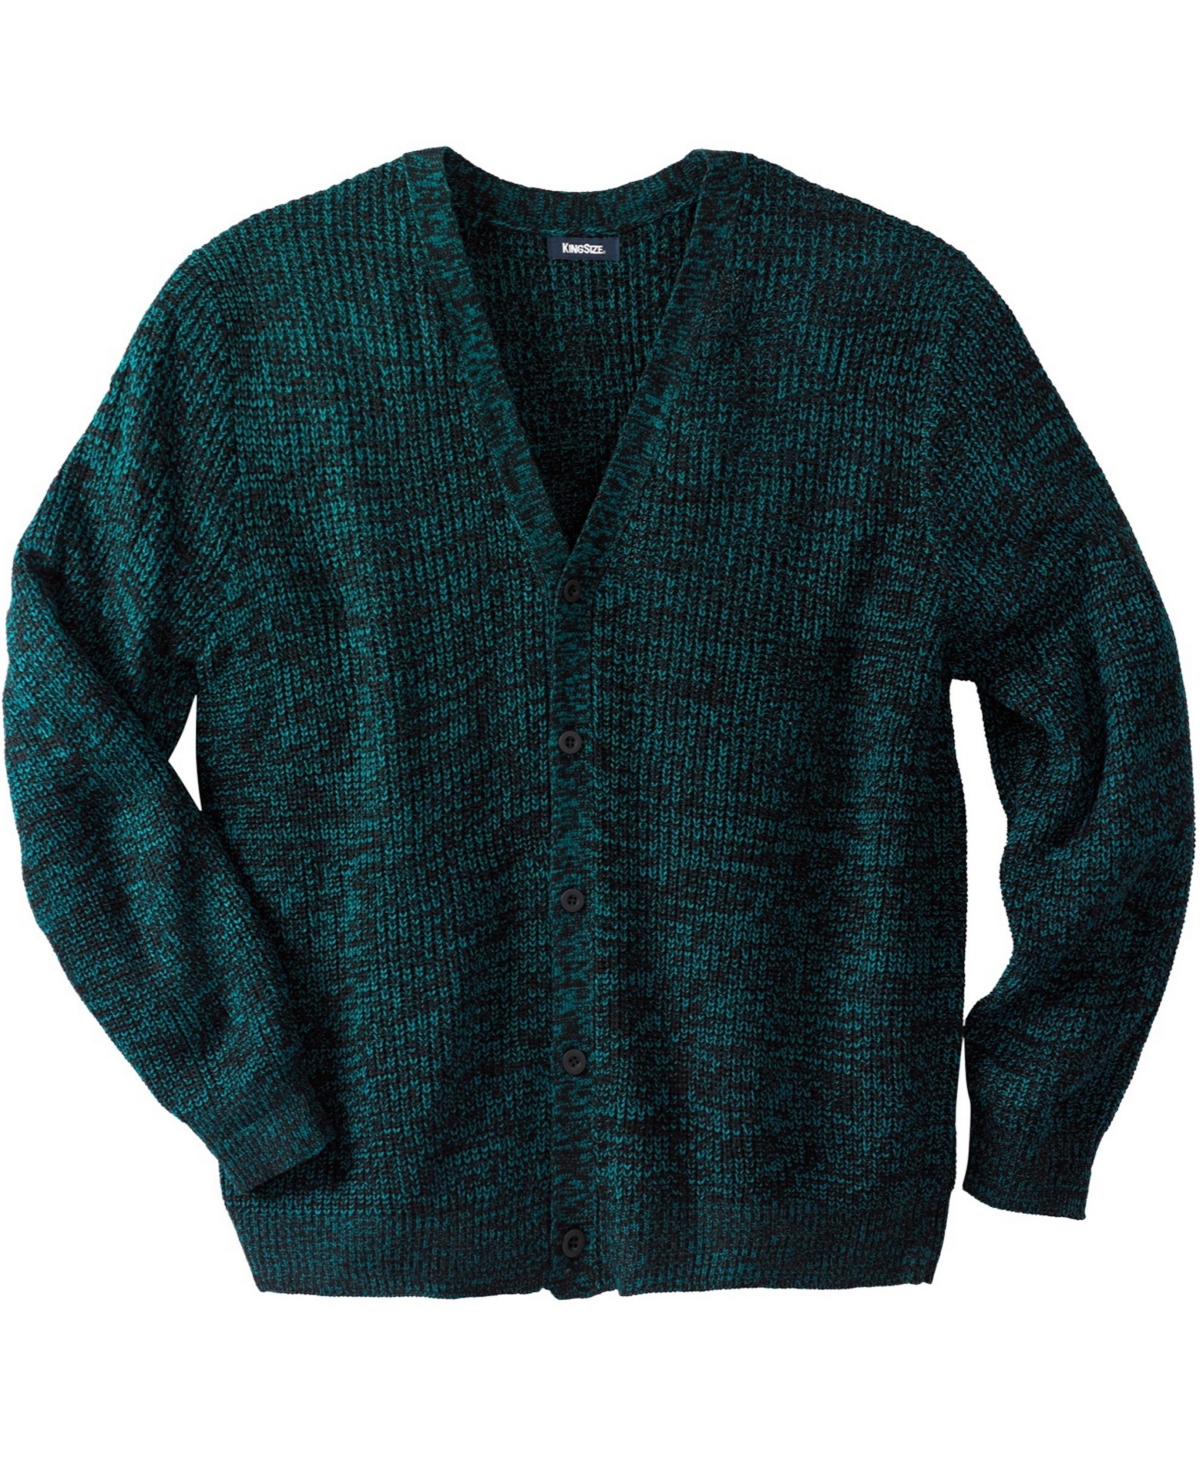 Big & Tall Shaker Knit V-Neck Cardigan Sweater - Black